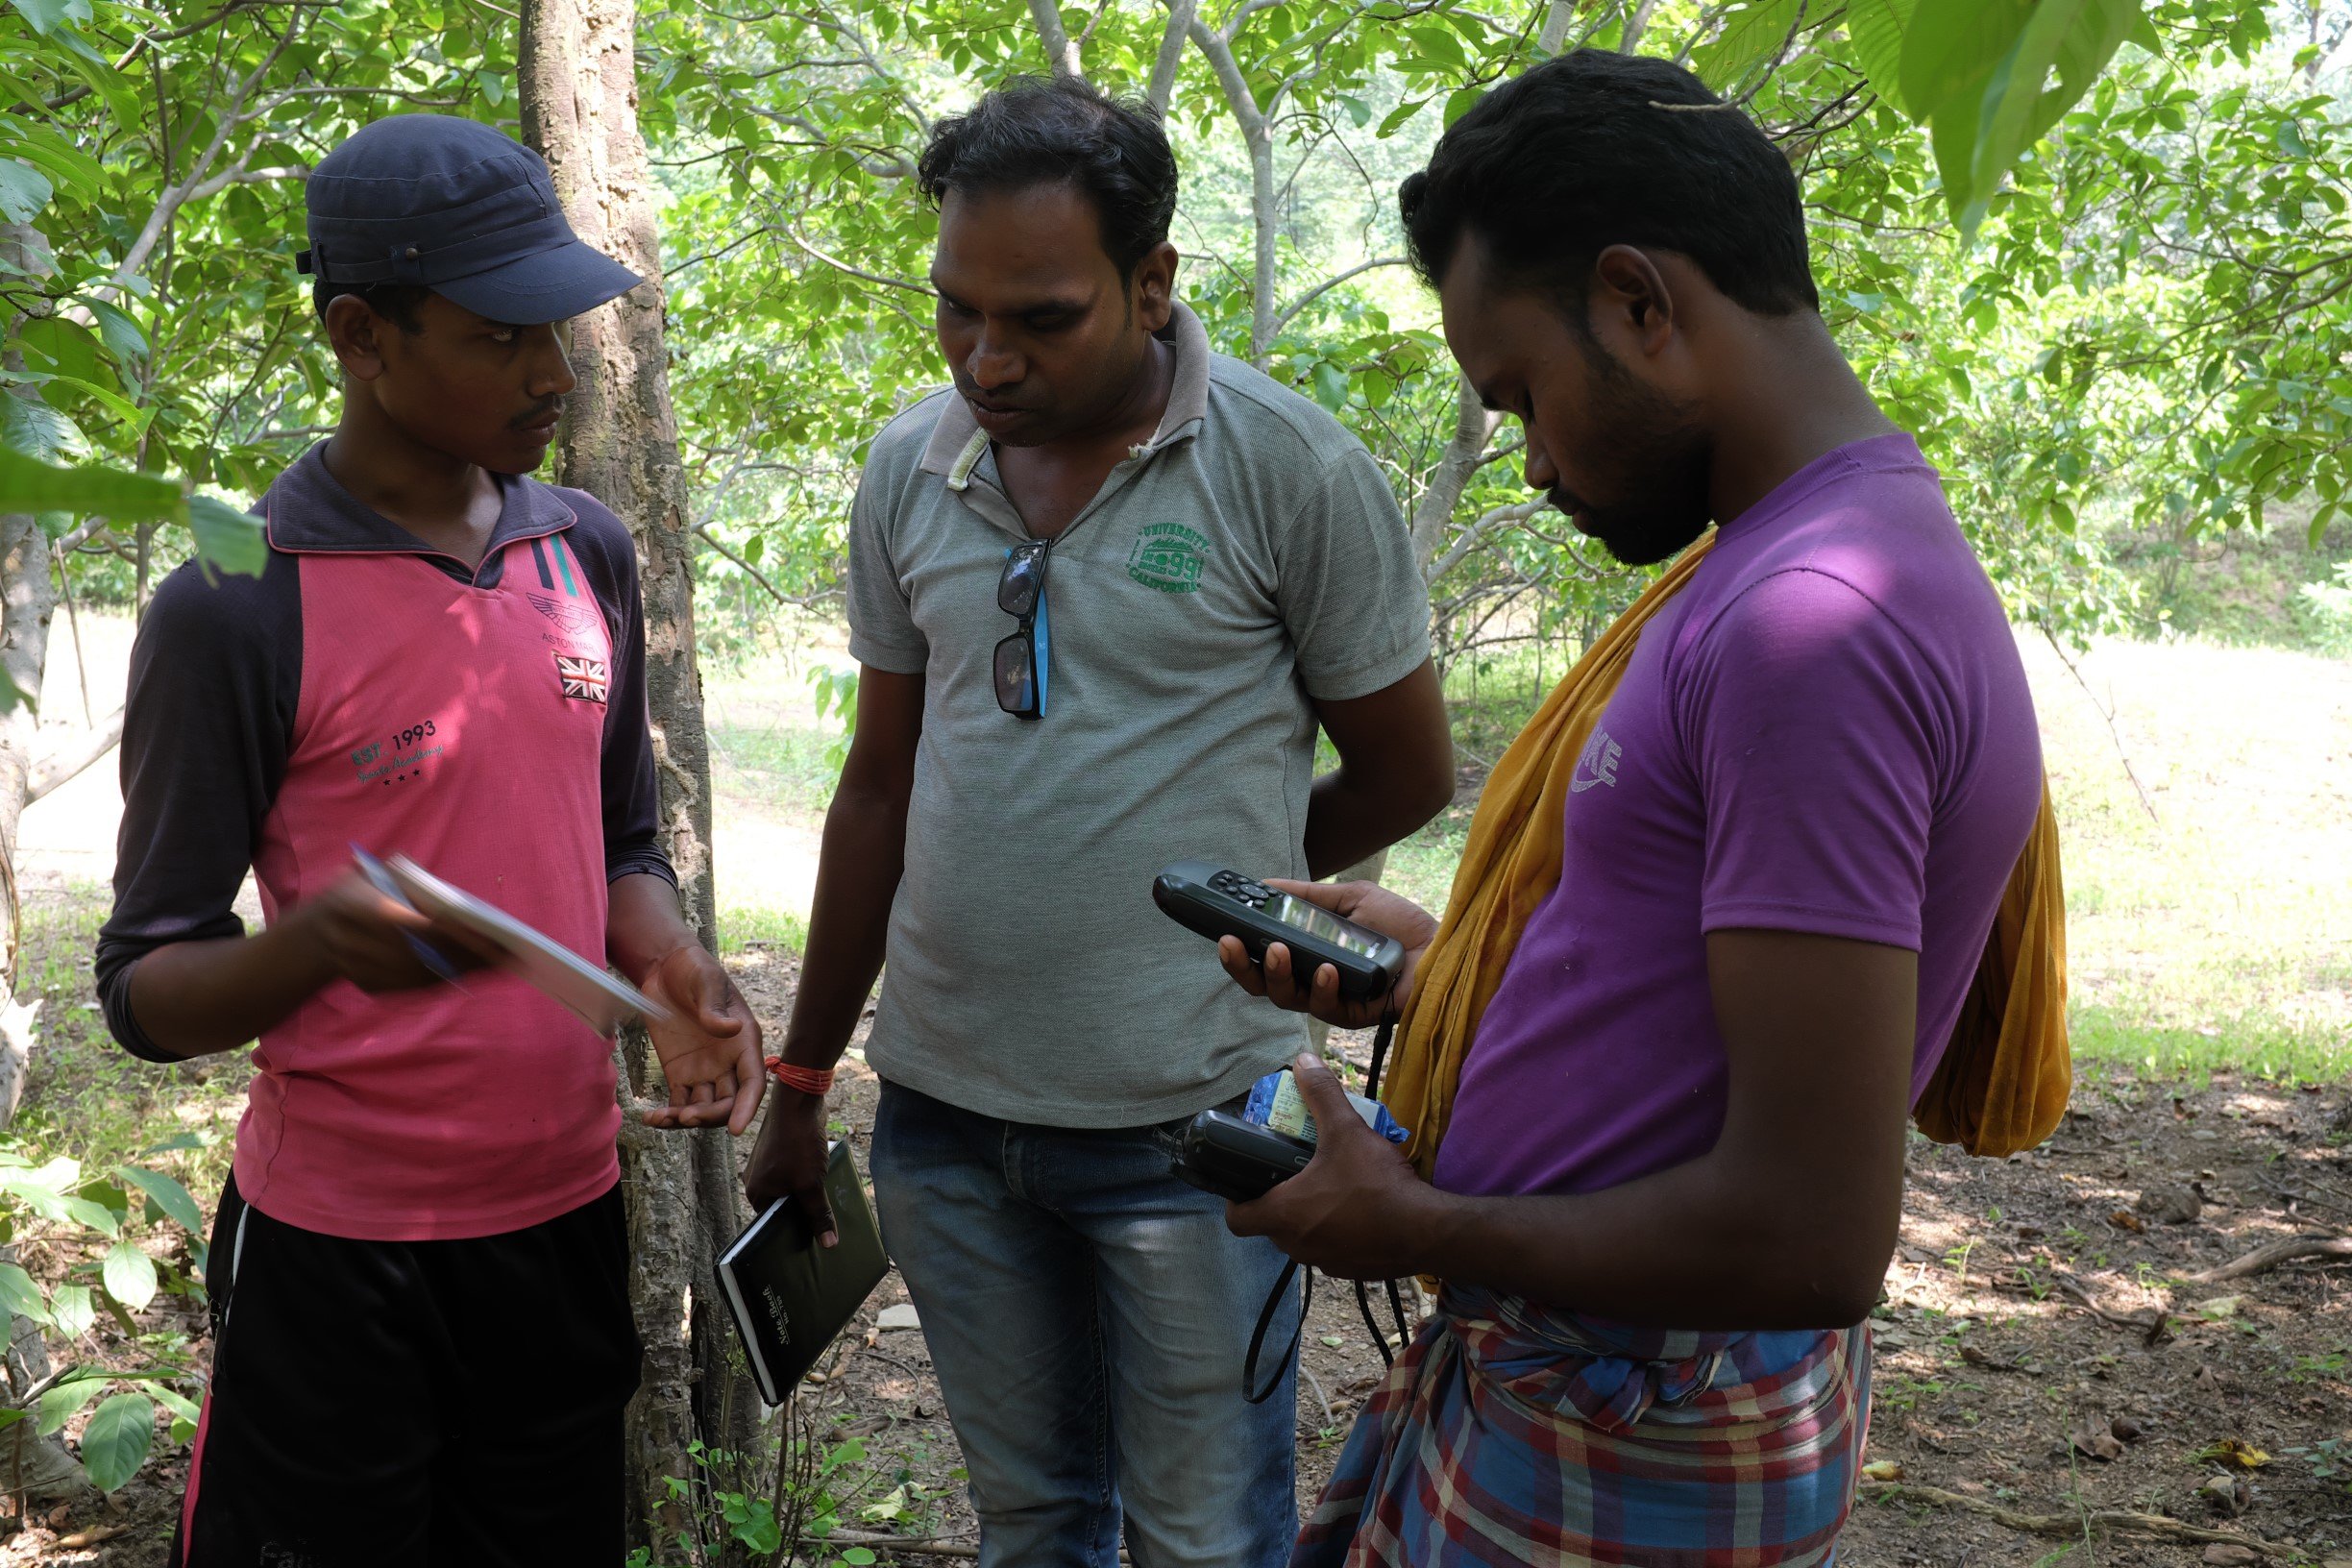 Villagers receiving GPS training from KHOJ staff.